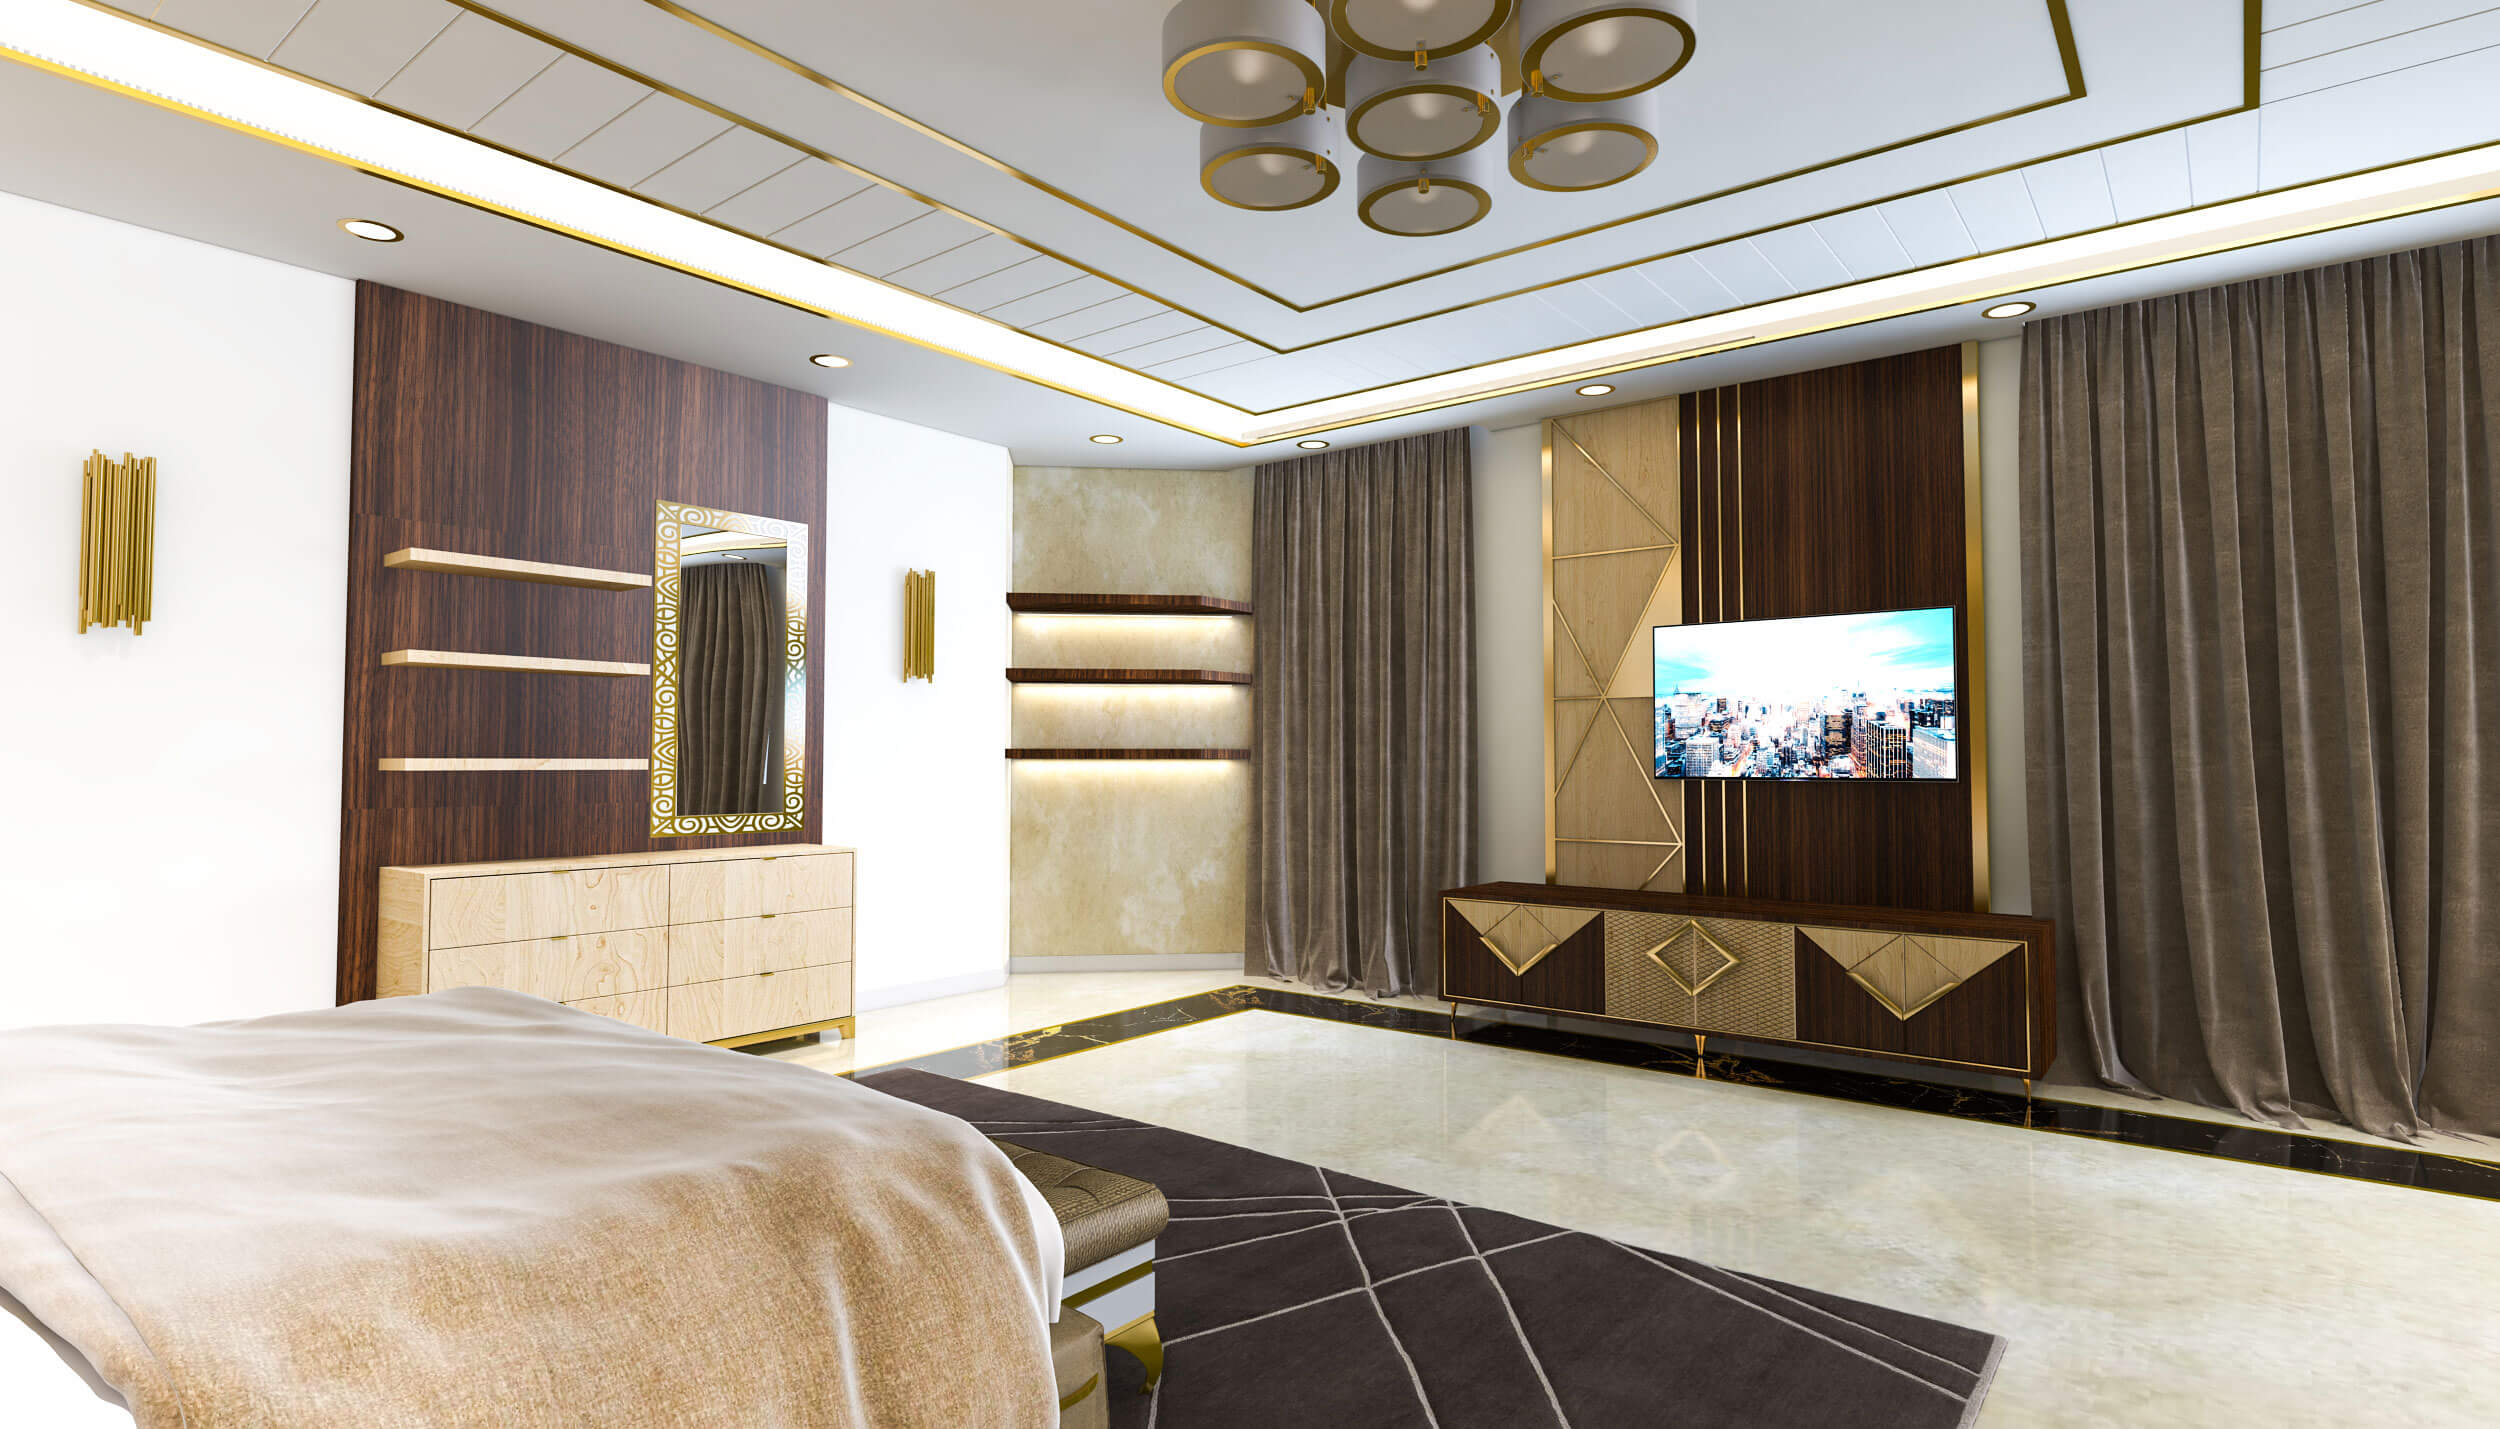 House interior design in qatar